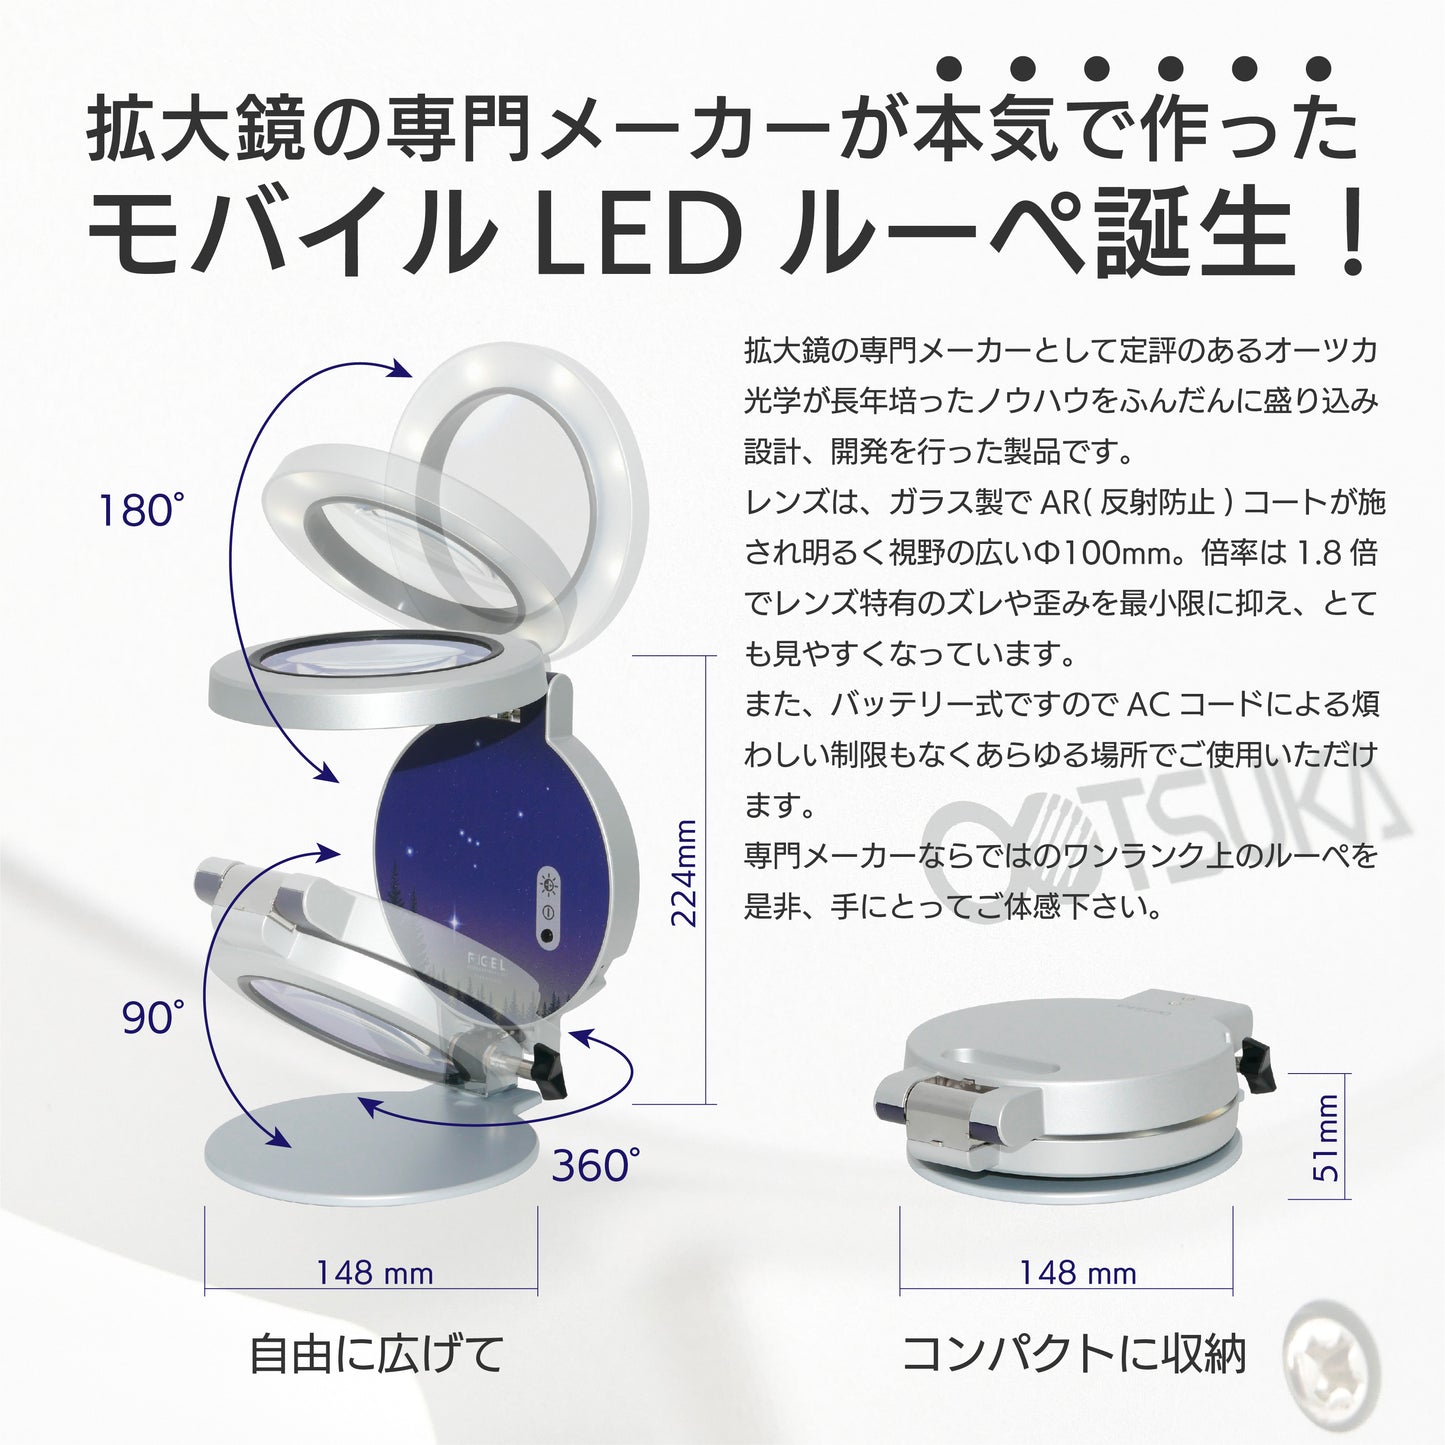 Mobile LED magnifying glass β-Rigel